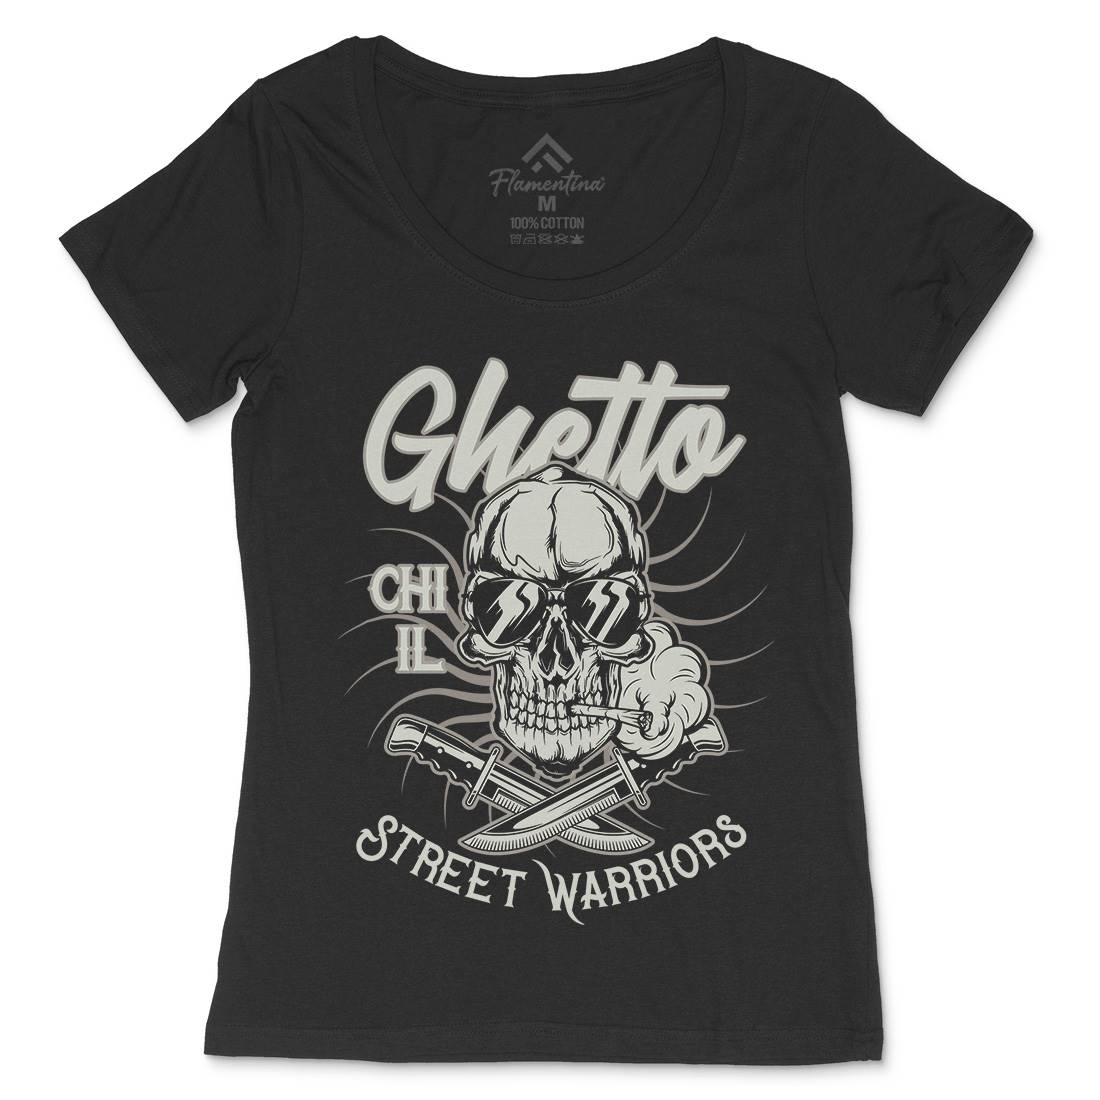 Ghetto Street Warriors Womens Scoop Neck T-Shirt Retro D937